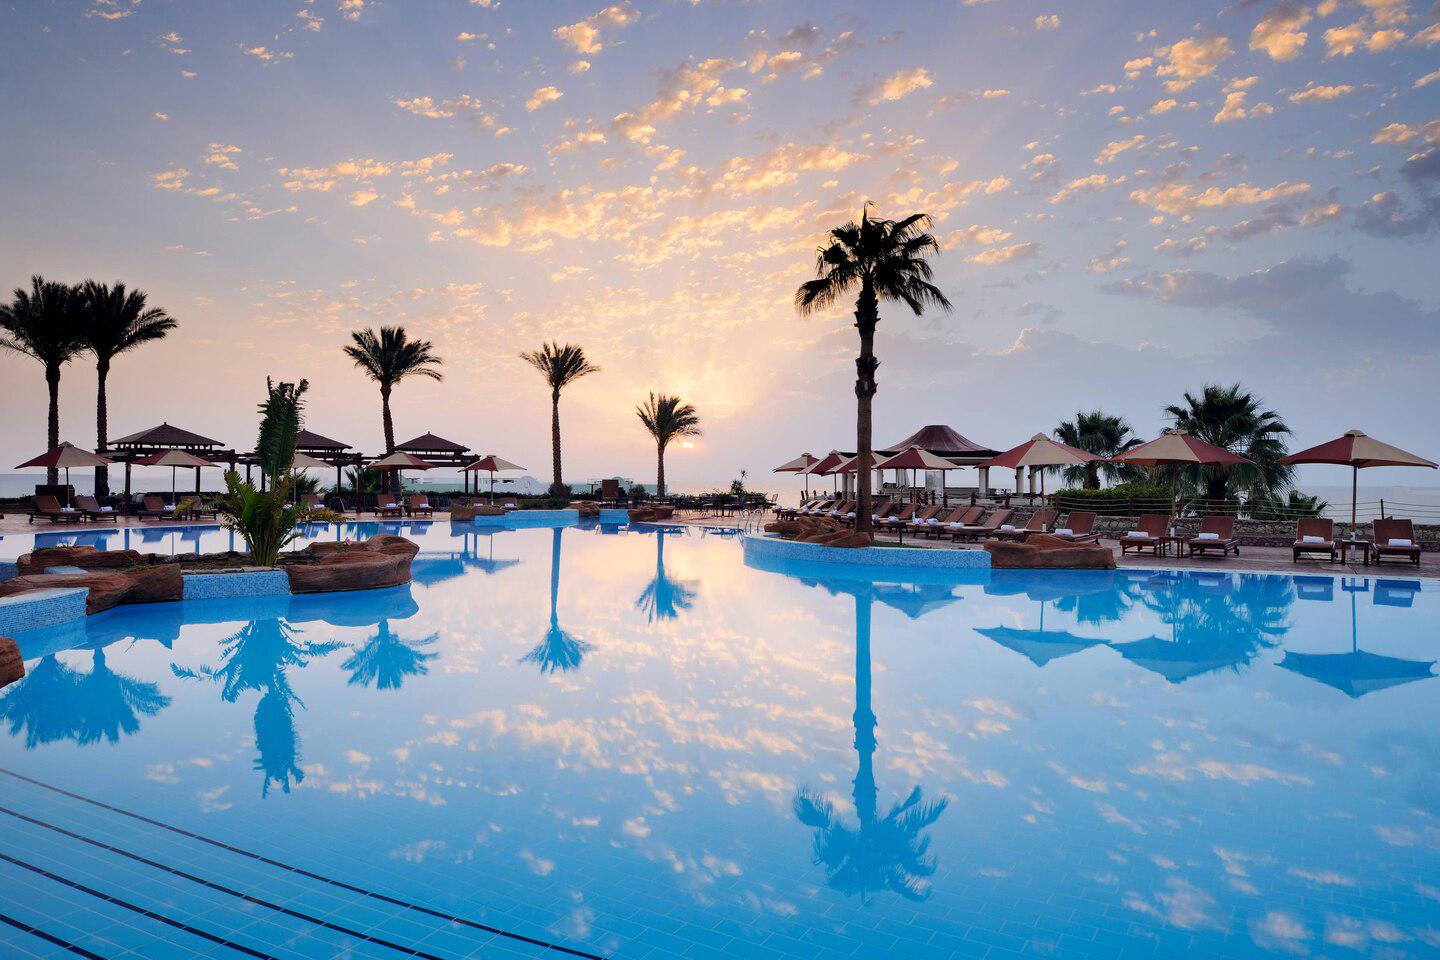 Renaissance Sharm El Sheikh Golden View Beach Resort